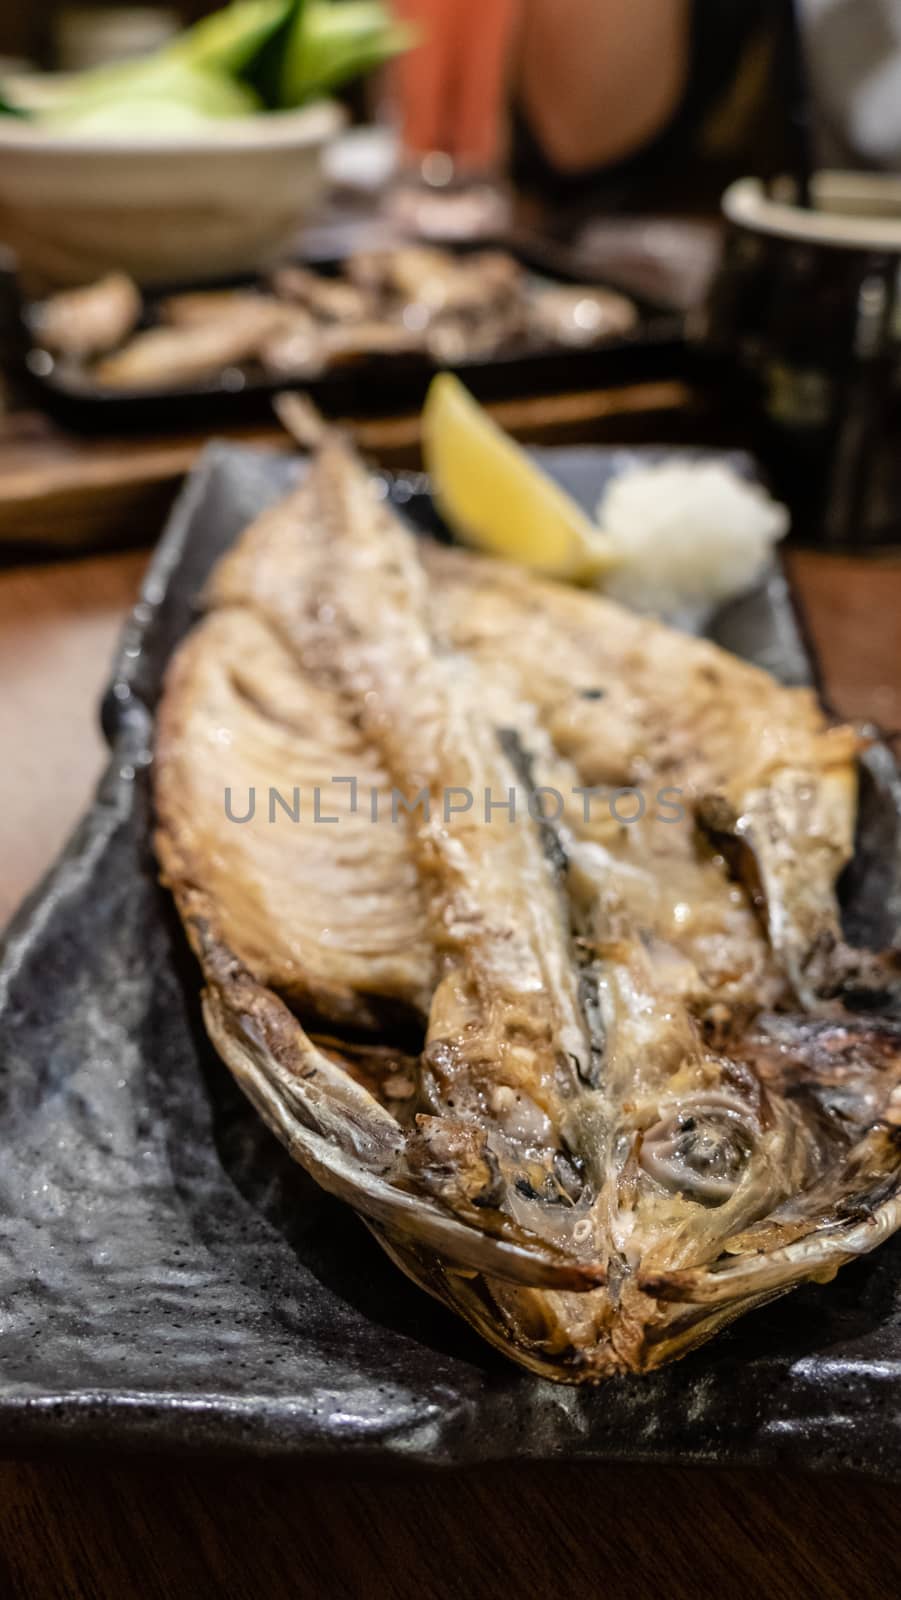 Fish served while grilling on metal dish at Japanese izakaya style restaurant